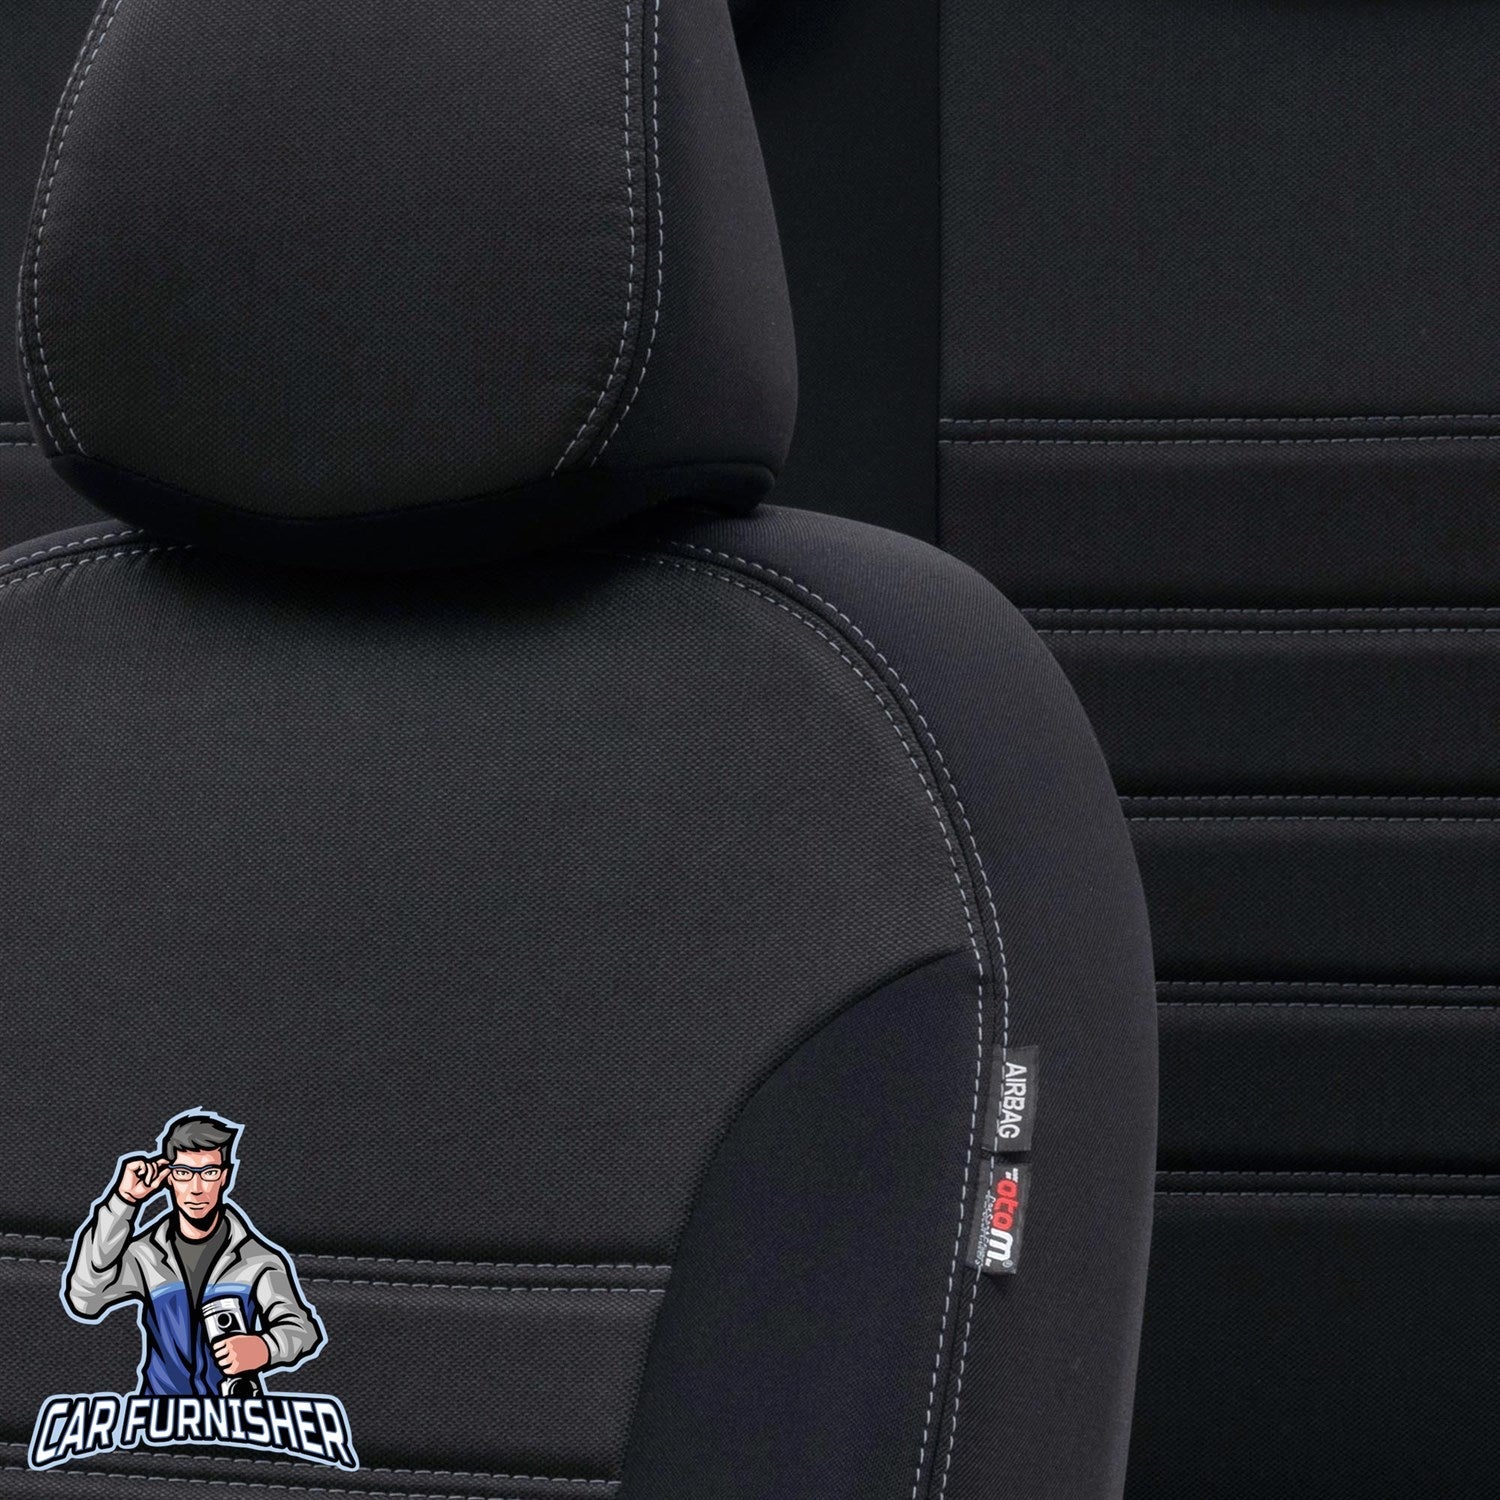 Man TGE Seat Covers Original Jacquard Design Black Jacquard Fabric